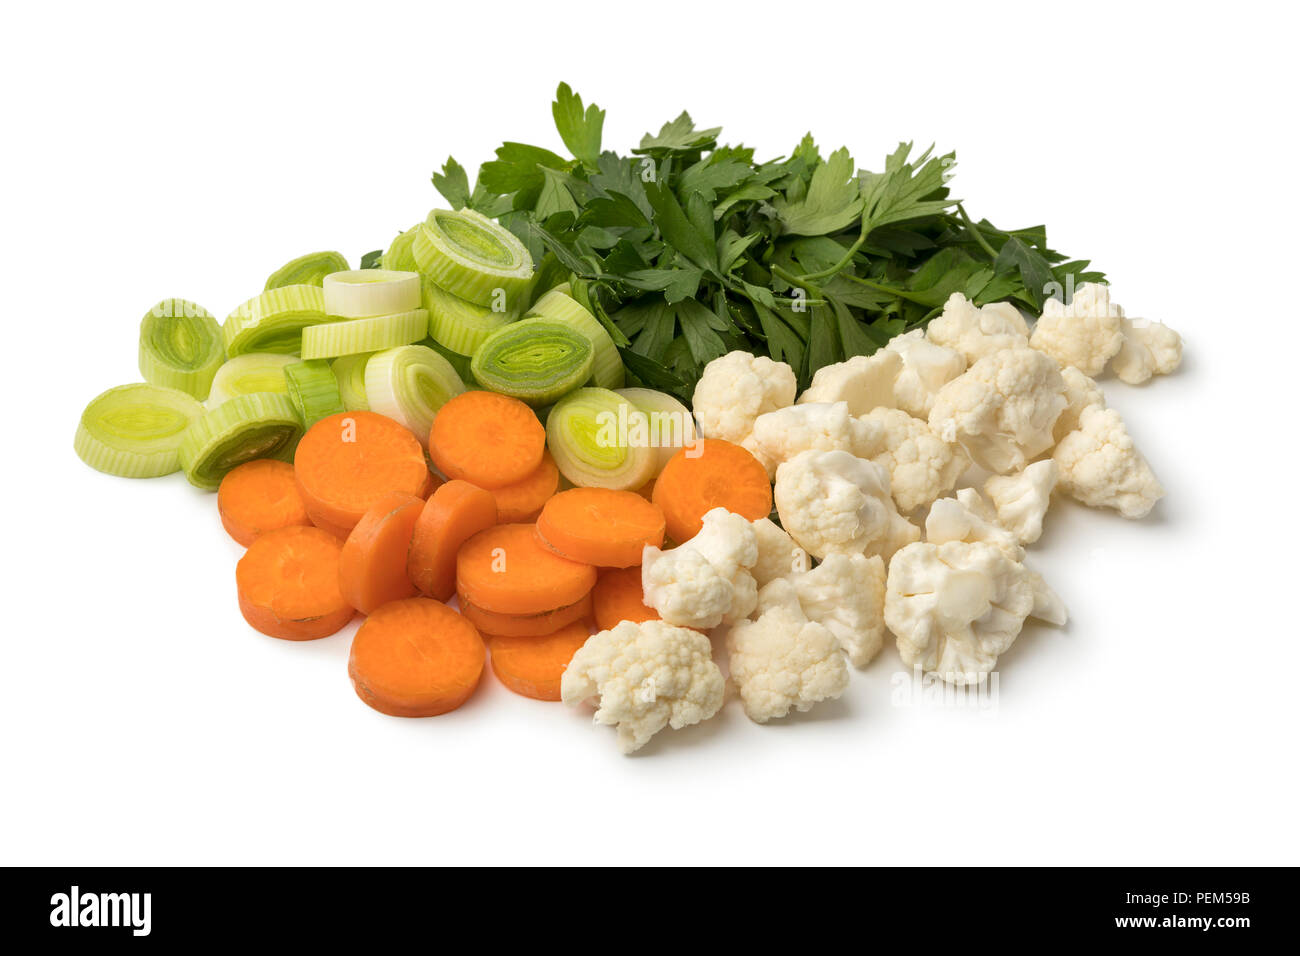 https://c8.alamy.com/comp/PEM59B/heap-of-fresh-cut-organic-vegetables-isolated-on-white-background-PEM59B.jpg